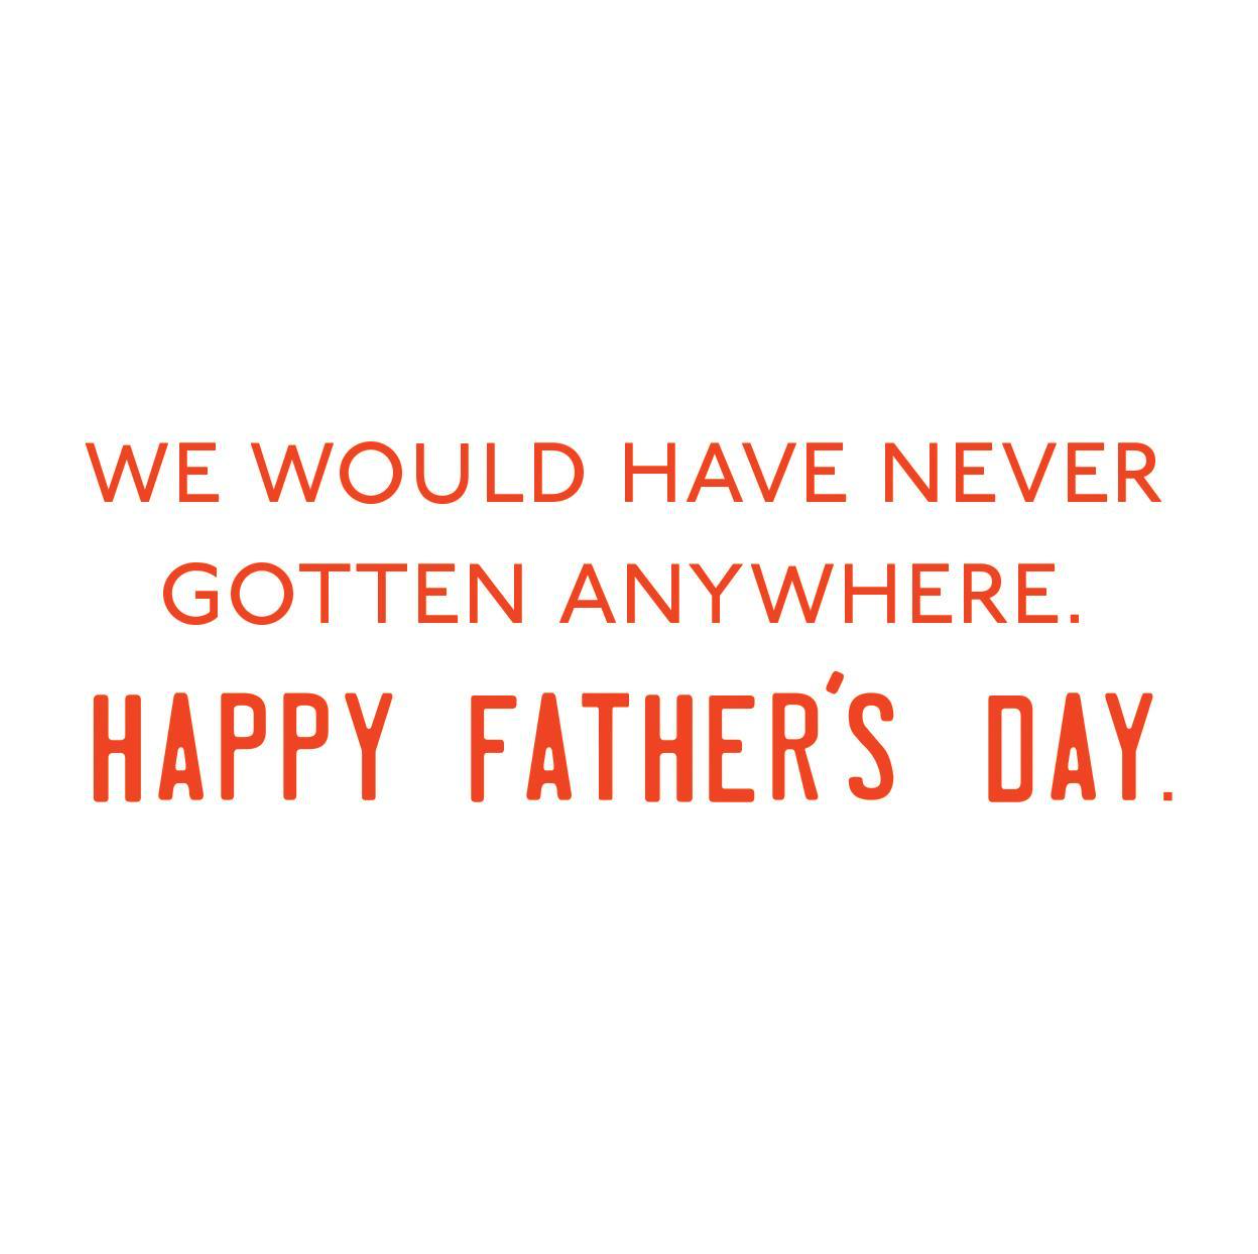 Dear Dad Father's Day Card